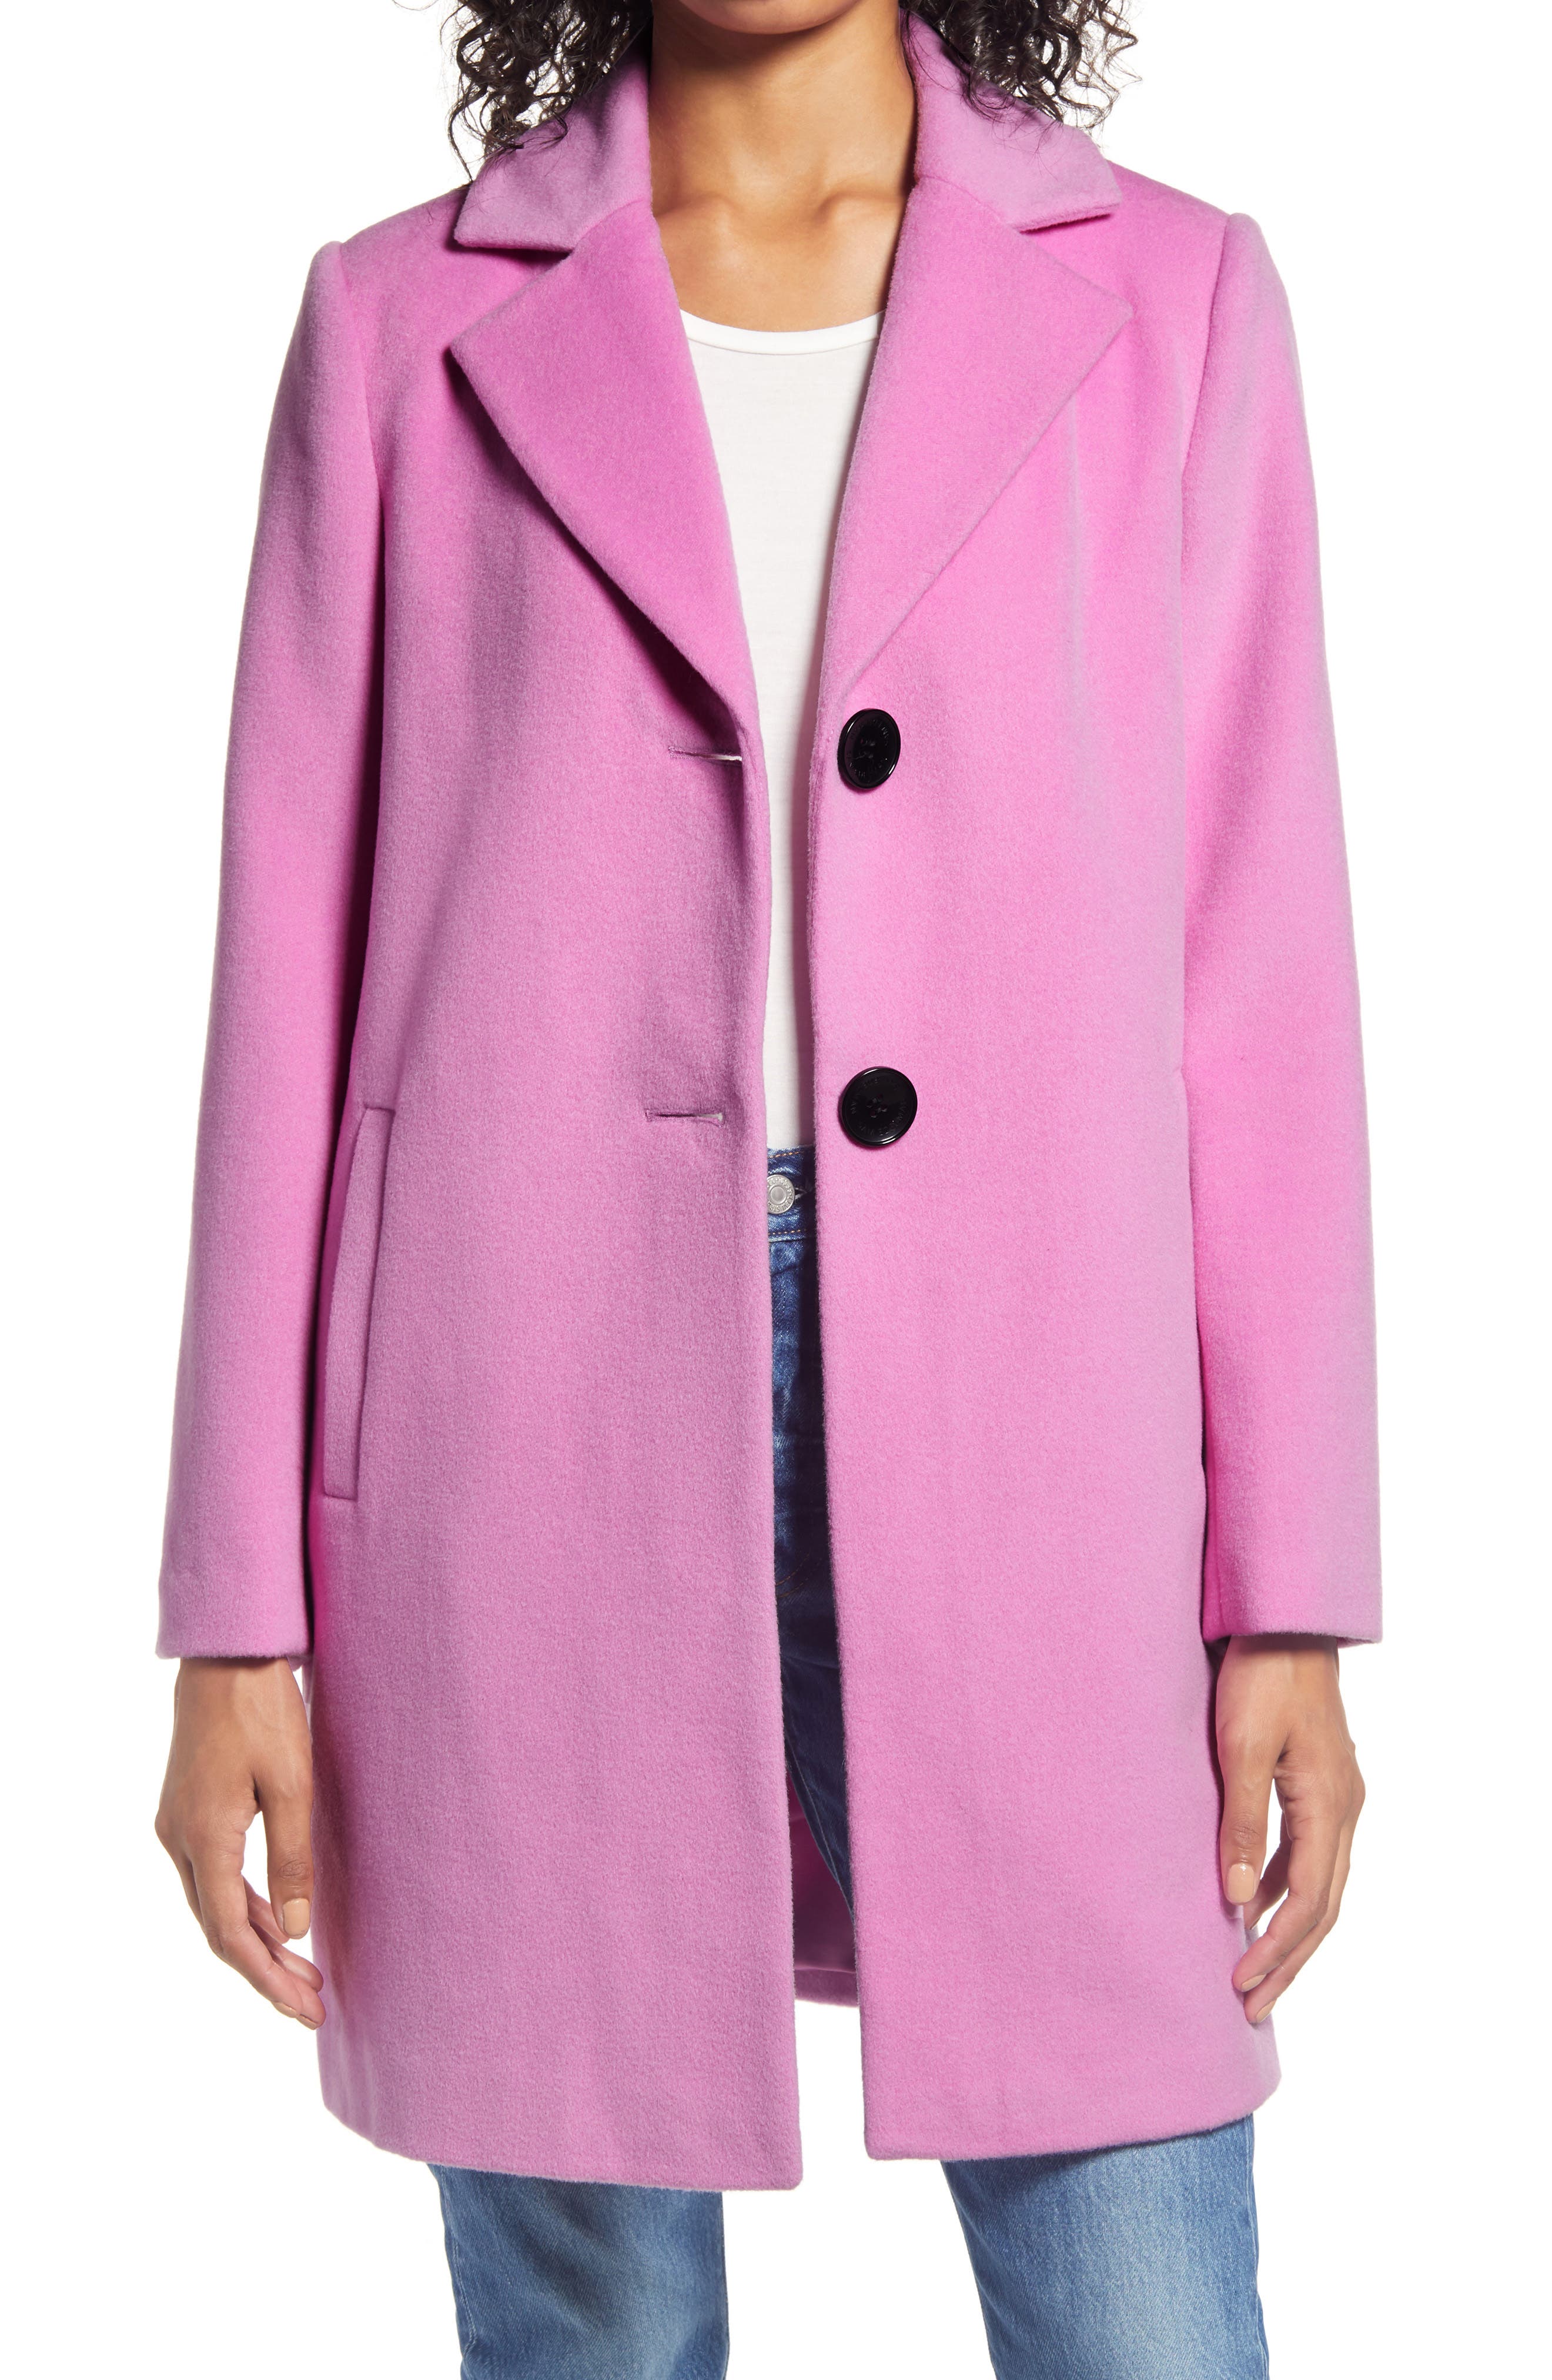 womens hot pink coat